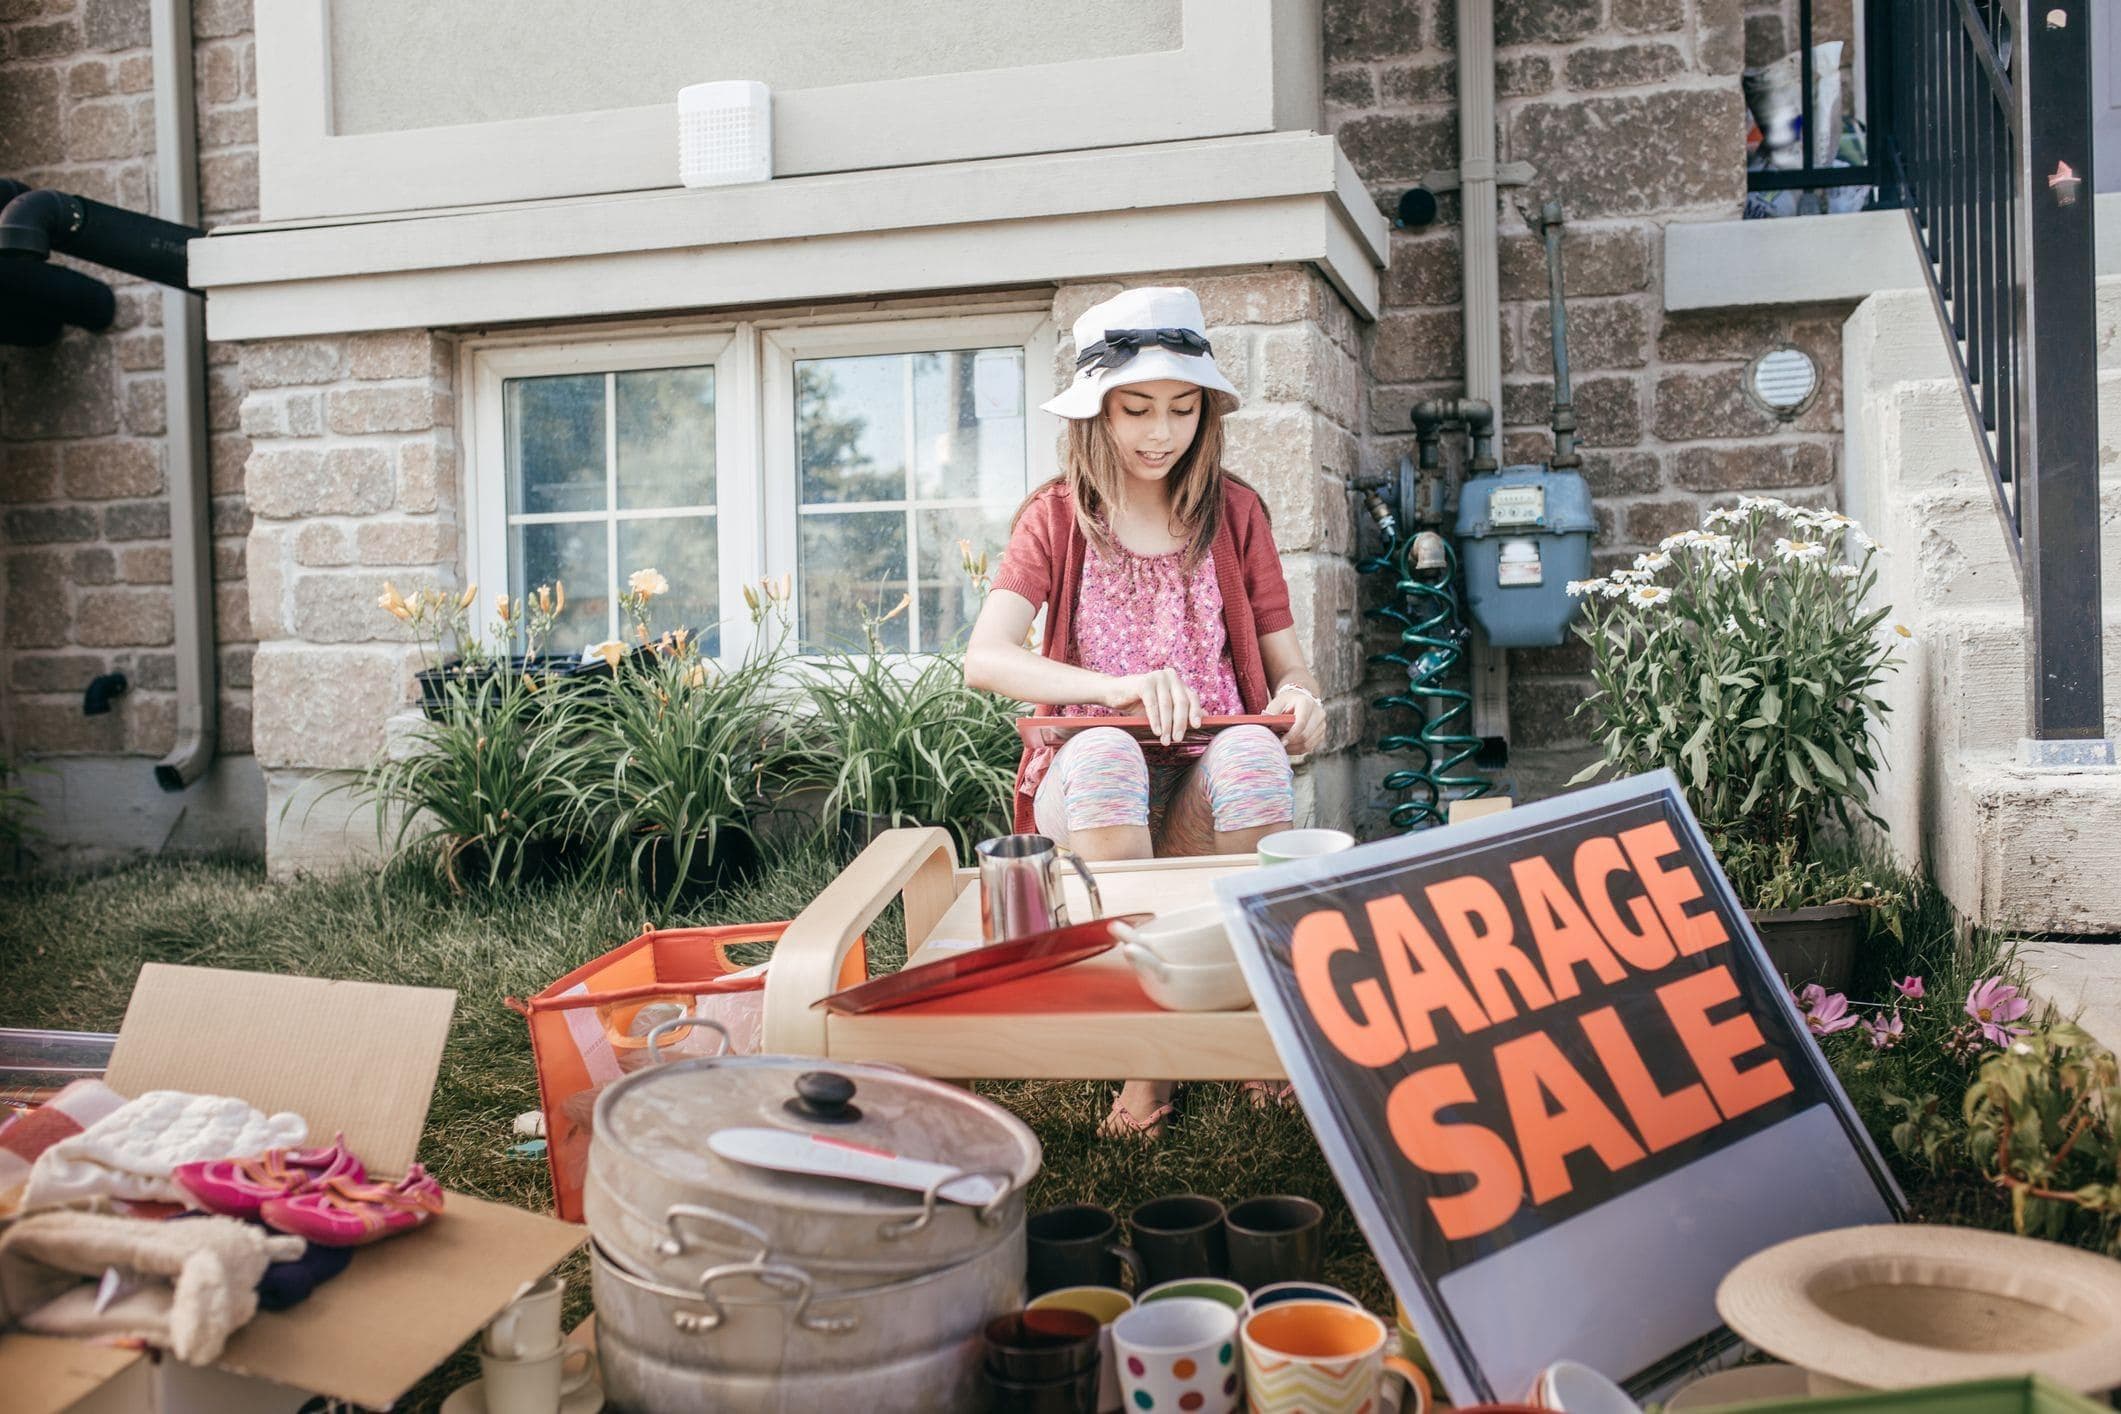 little girl hosting a garage sale to declutter garage on earth day